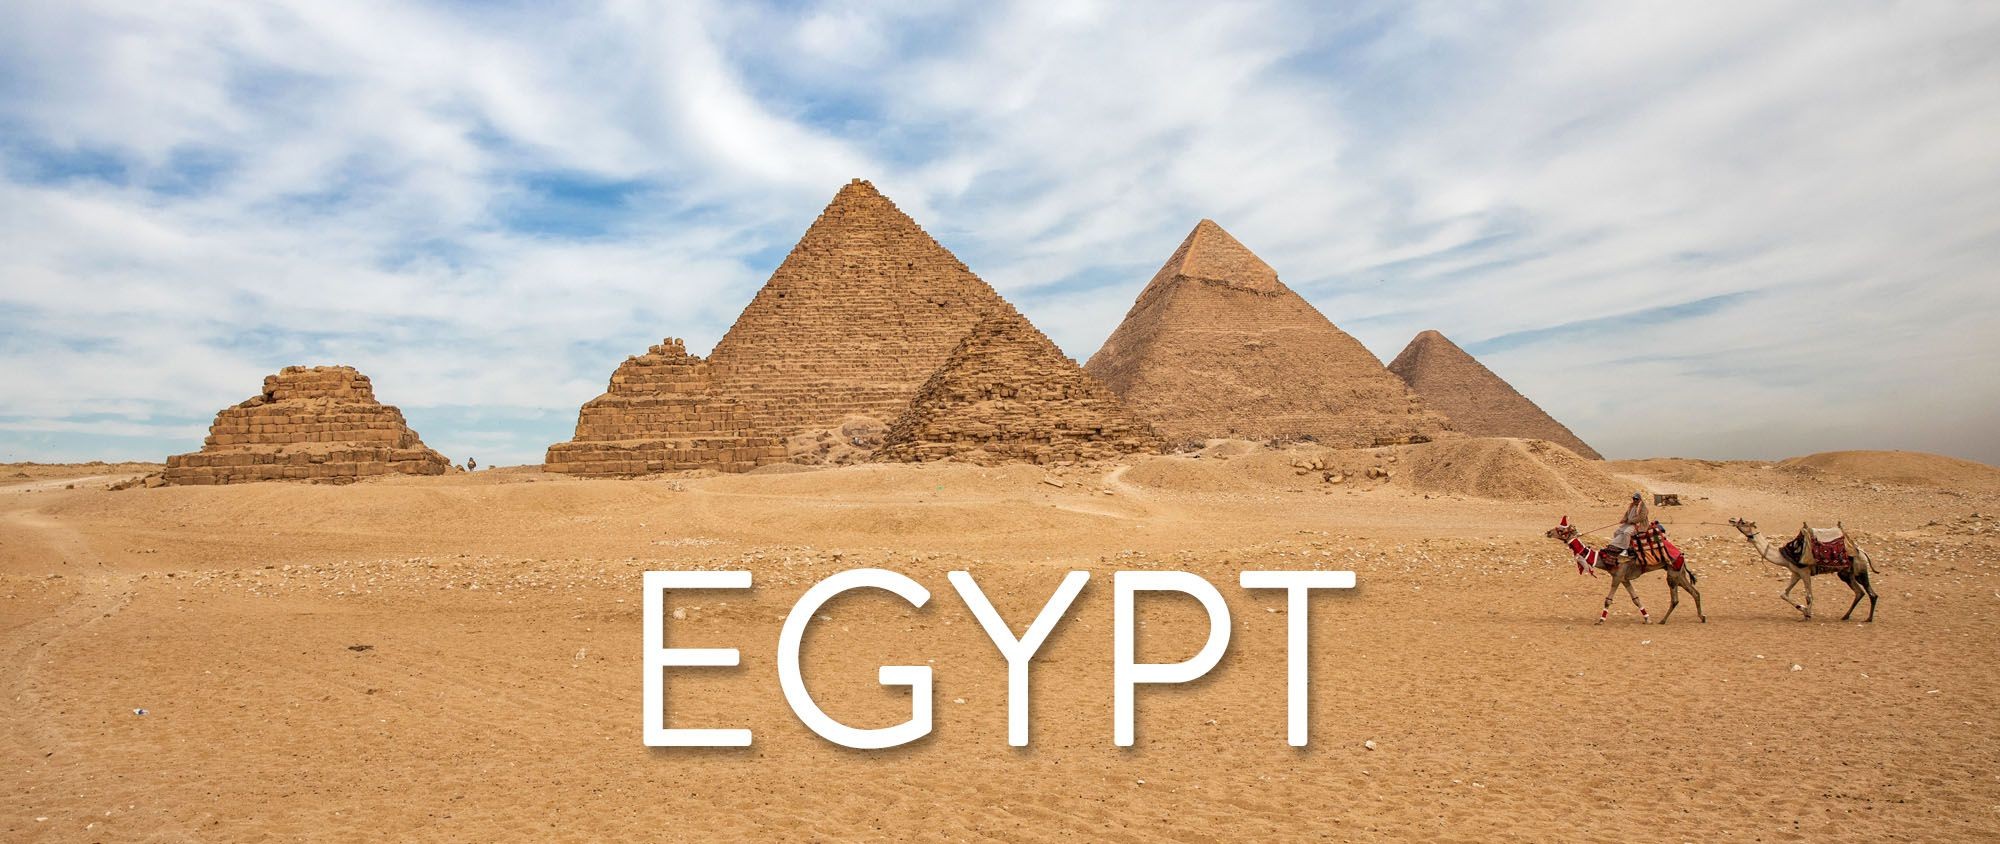 History of Egypt - Giza pyramids